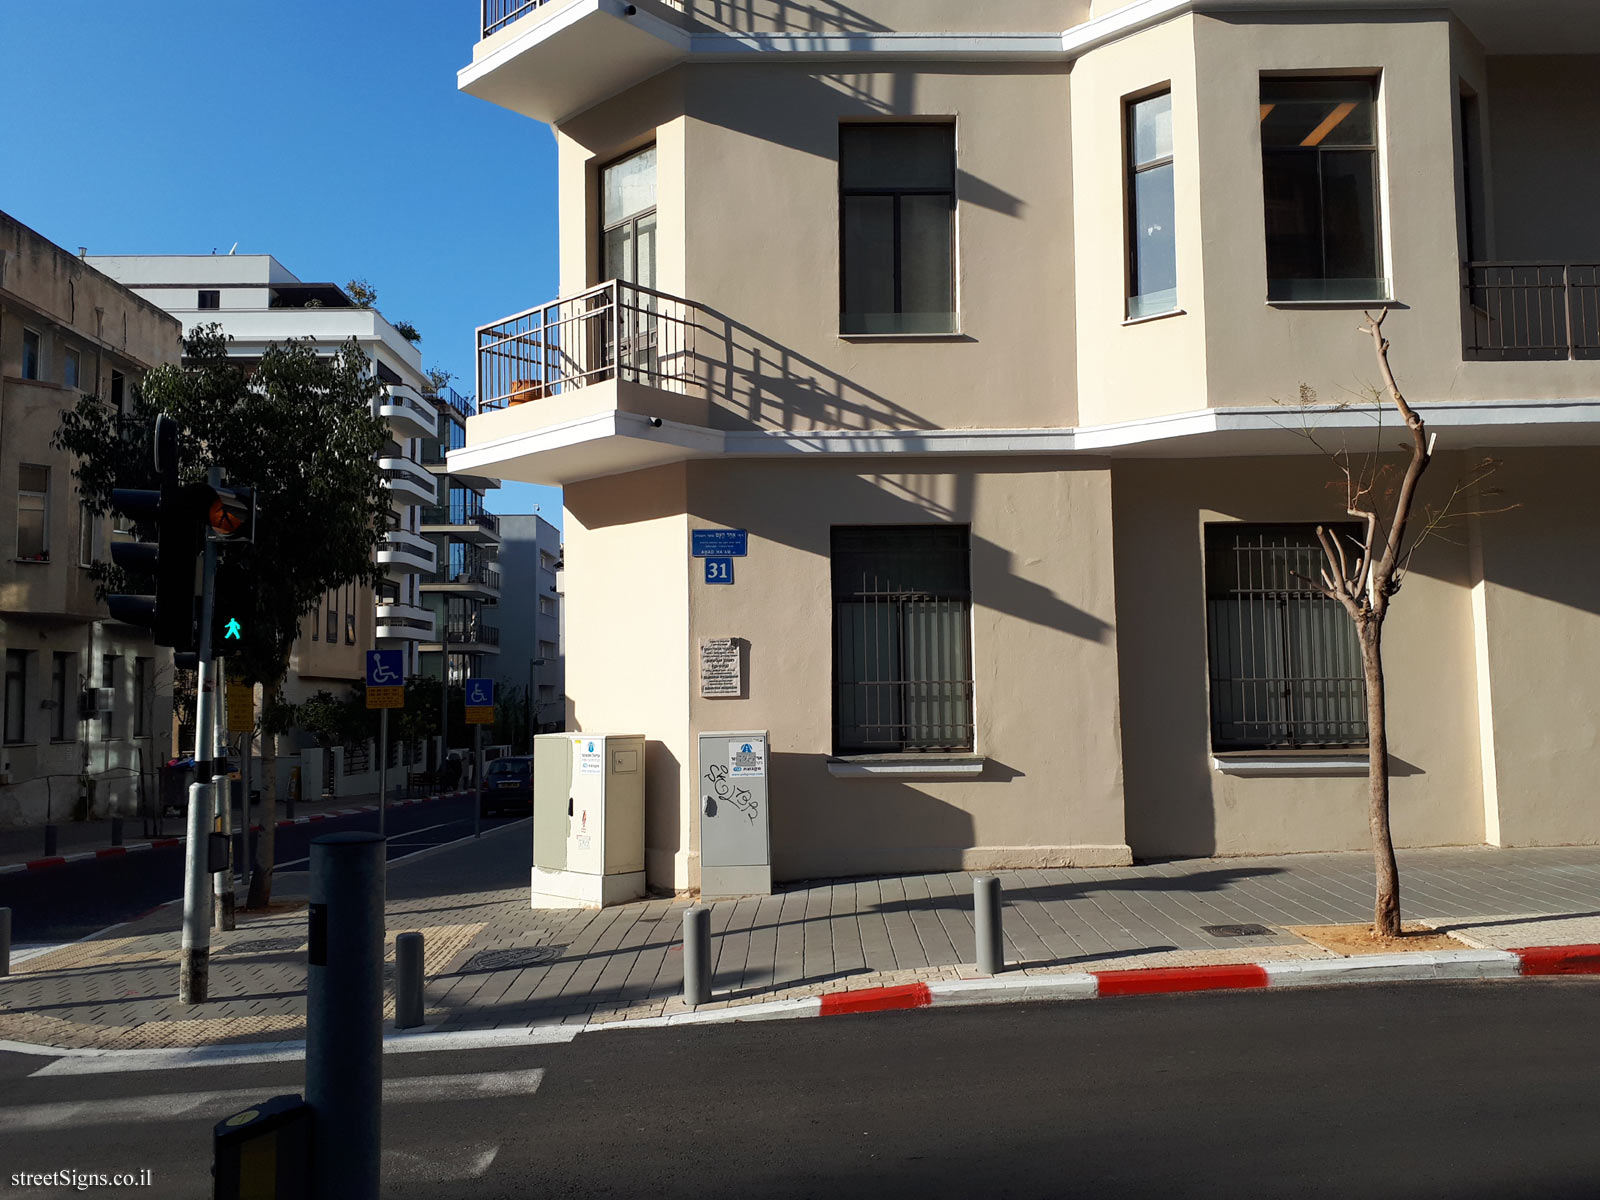 The house of Eliezer Steinman & Reuven Avinoam - Ahad Ha’Am St 31, Tel Aviv-Yafo, Israel